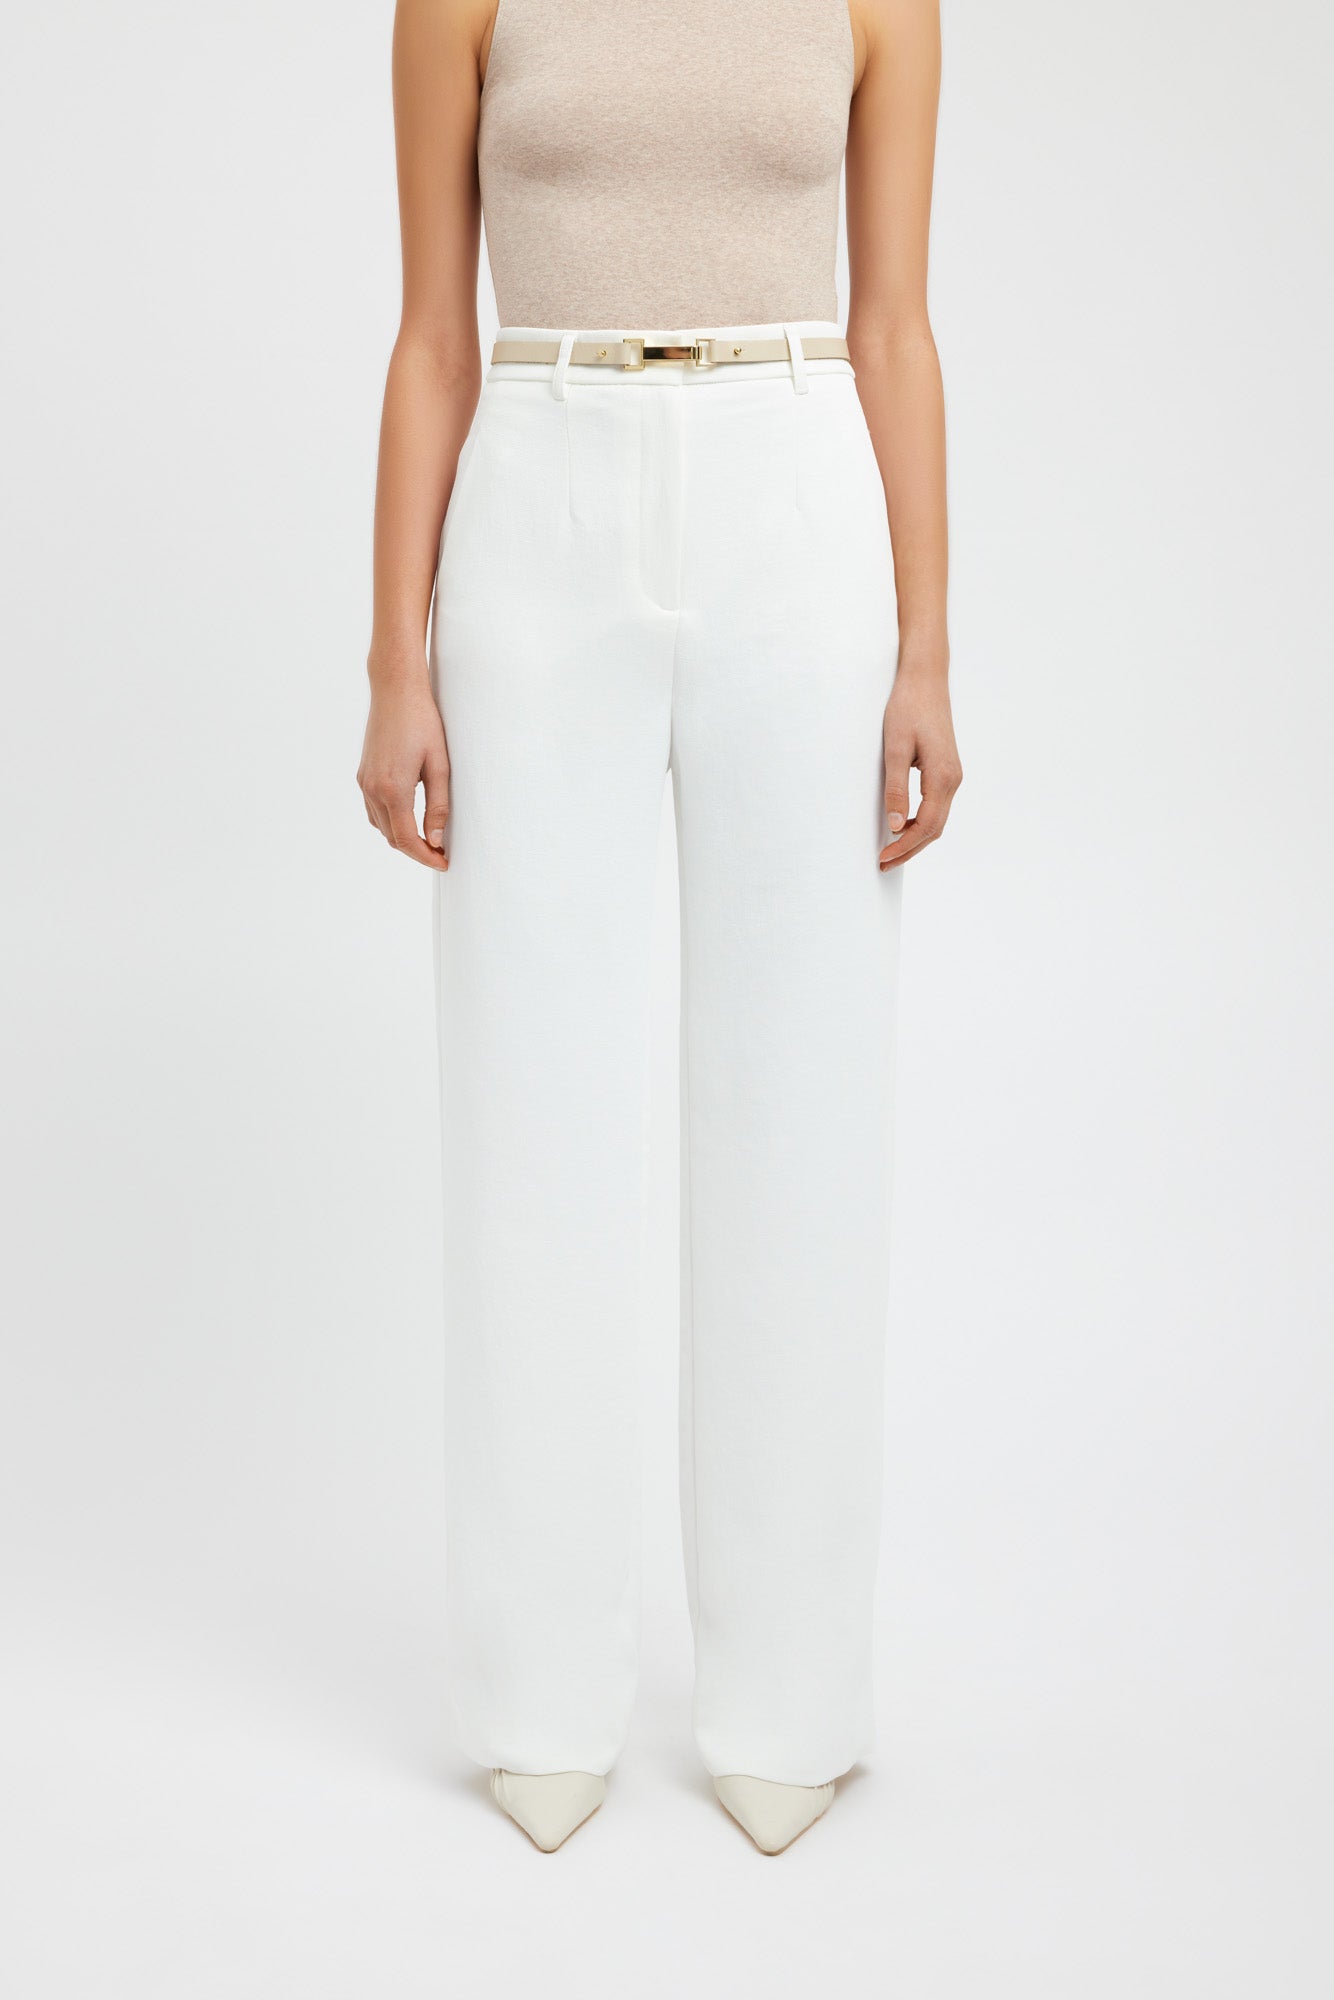 White Jeans For Women : Target